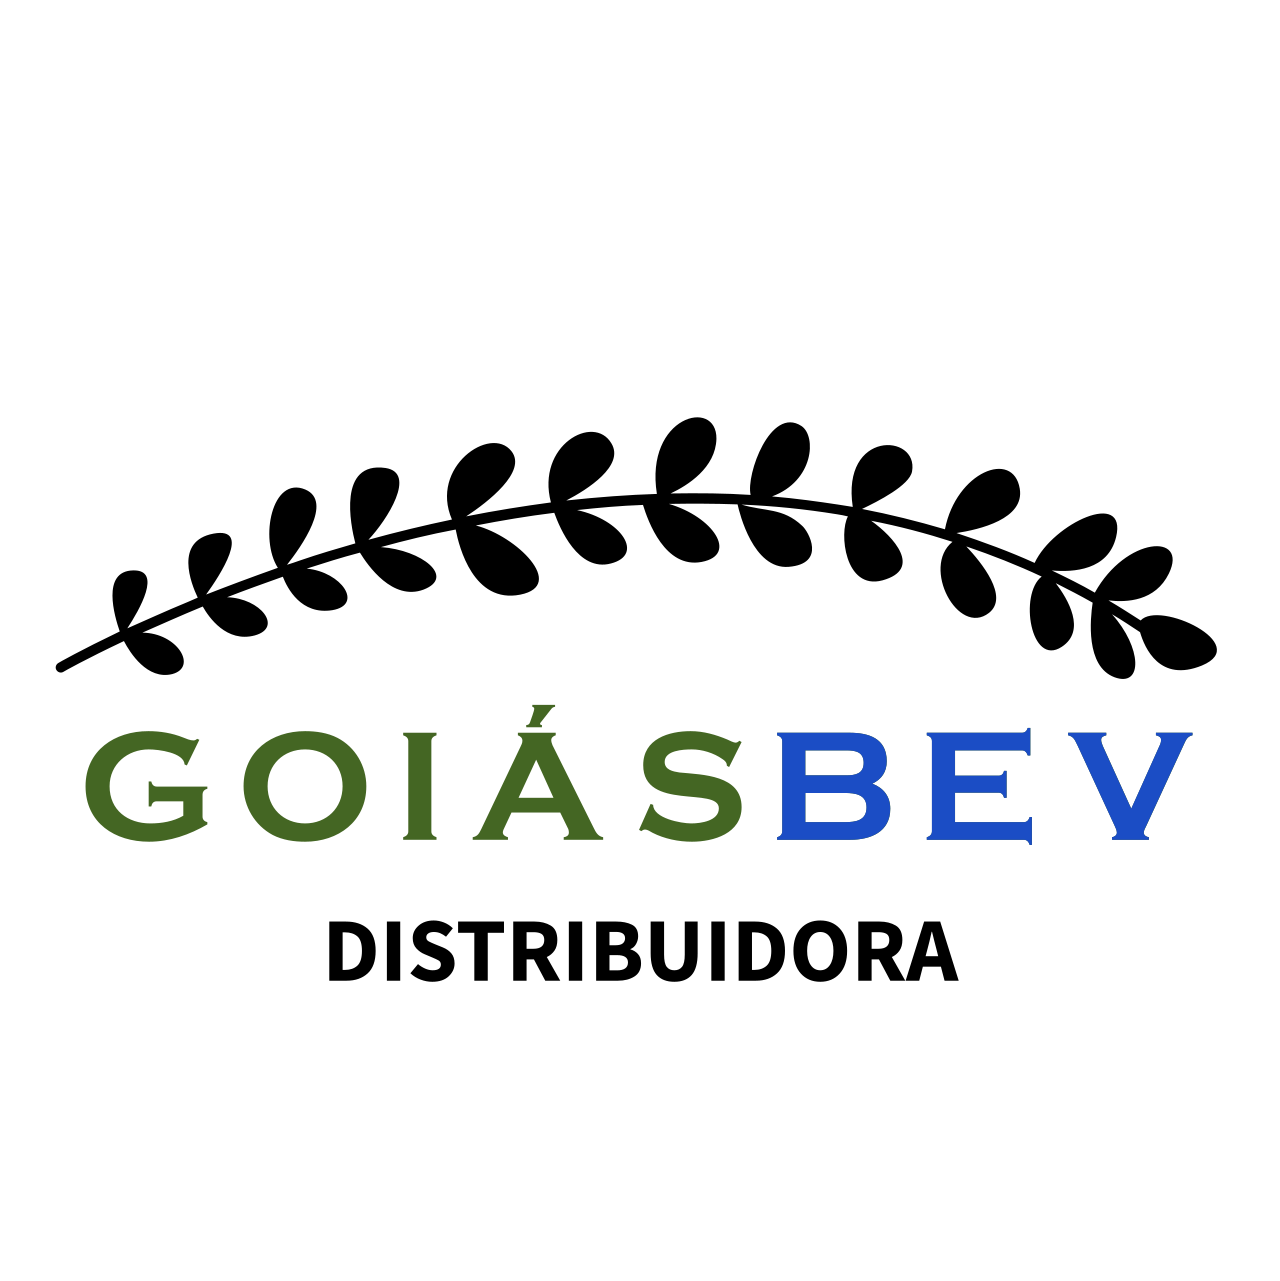 GoiásBEV's logo